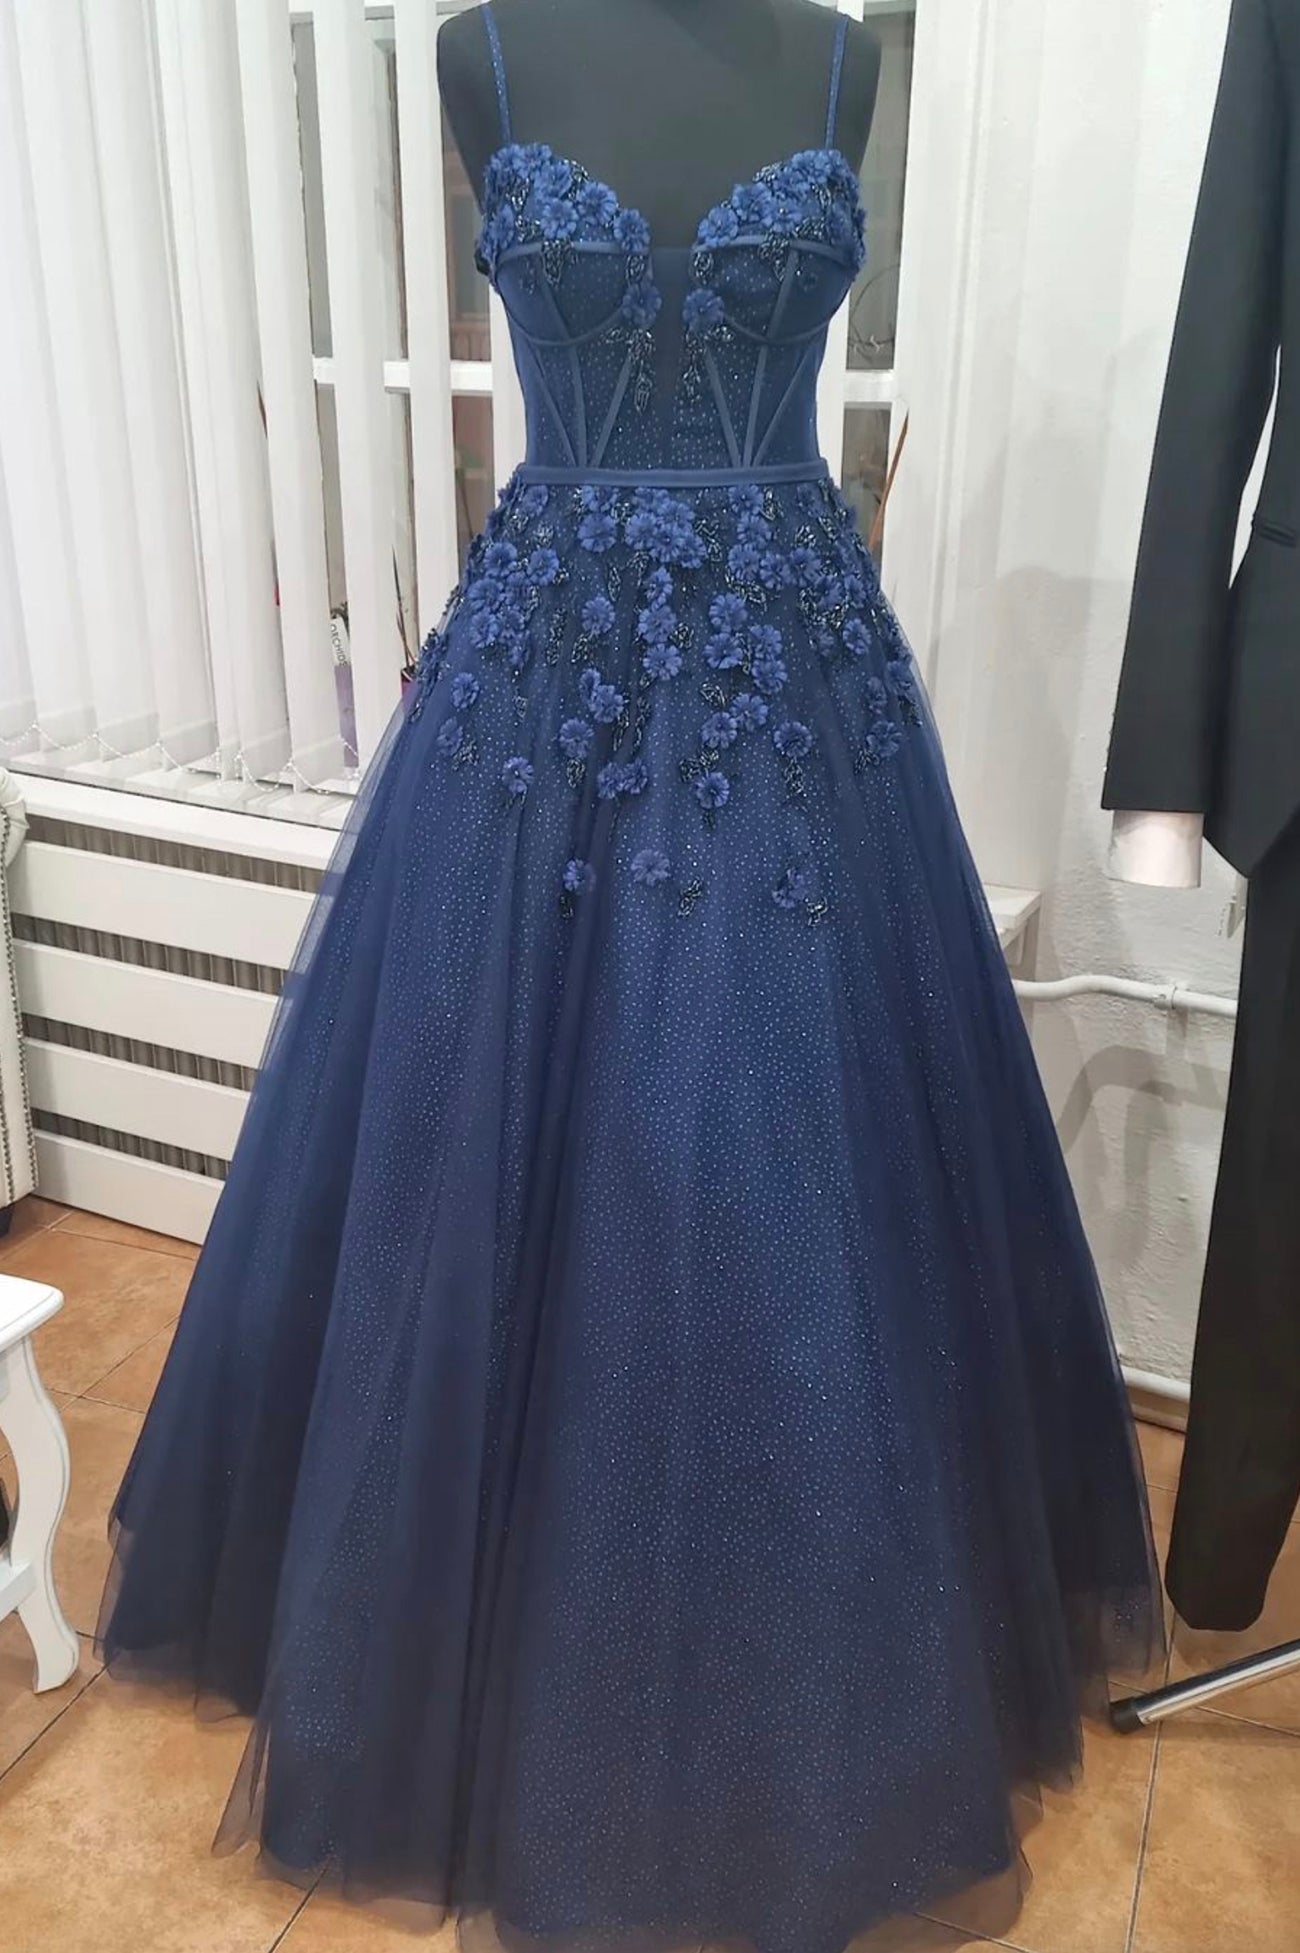 Evening Dresses For Sale, Blue Spaghetti Strap Tulle Appliqu¨¦d Long A-Line Prom Dress